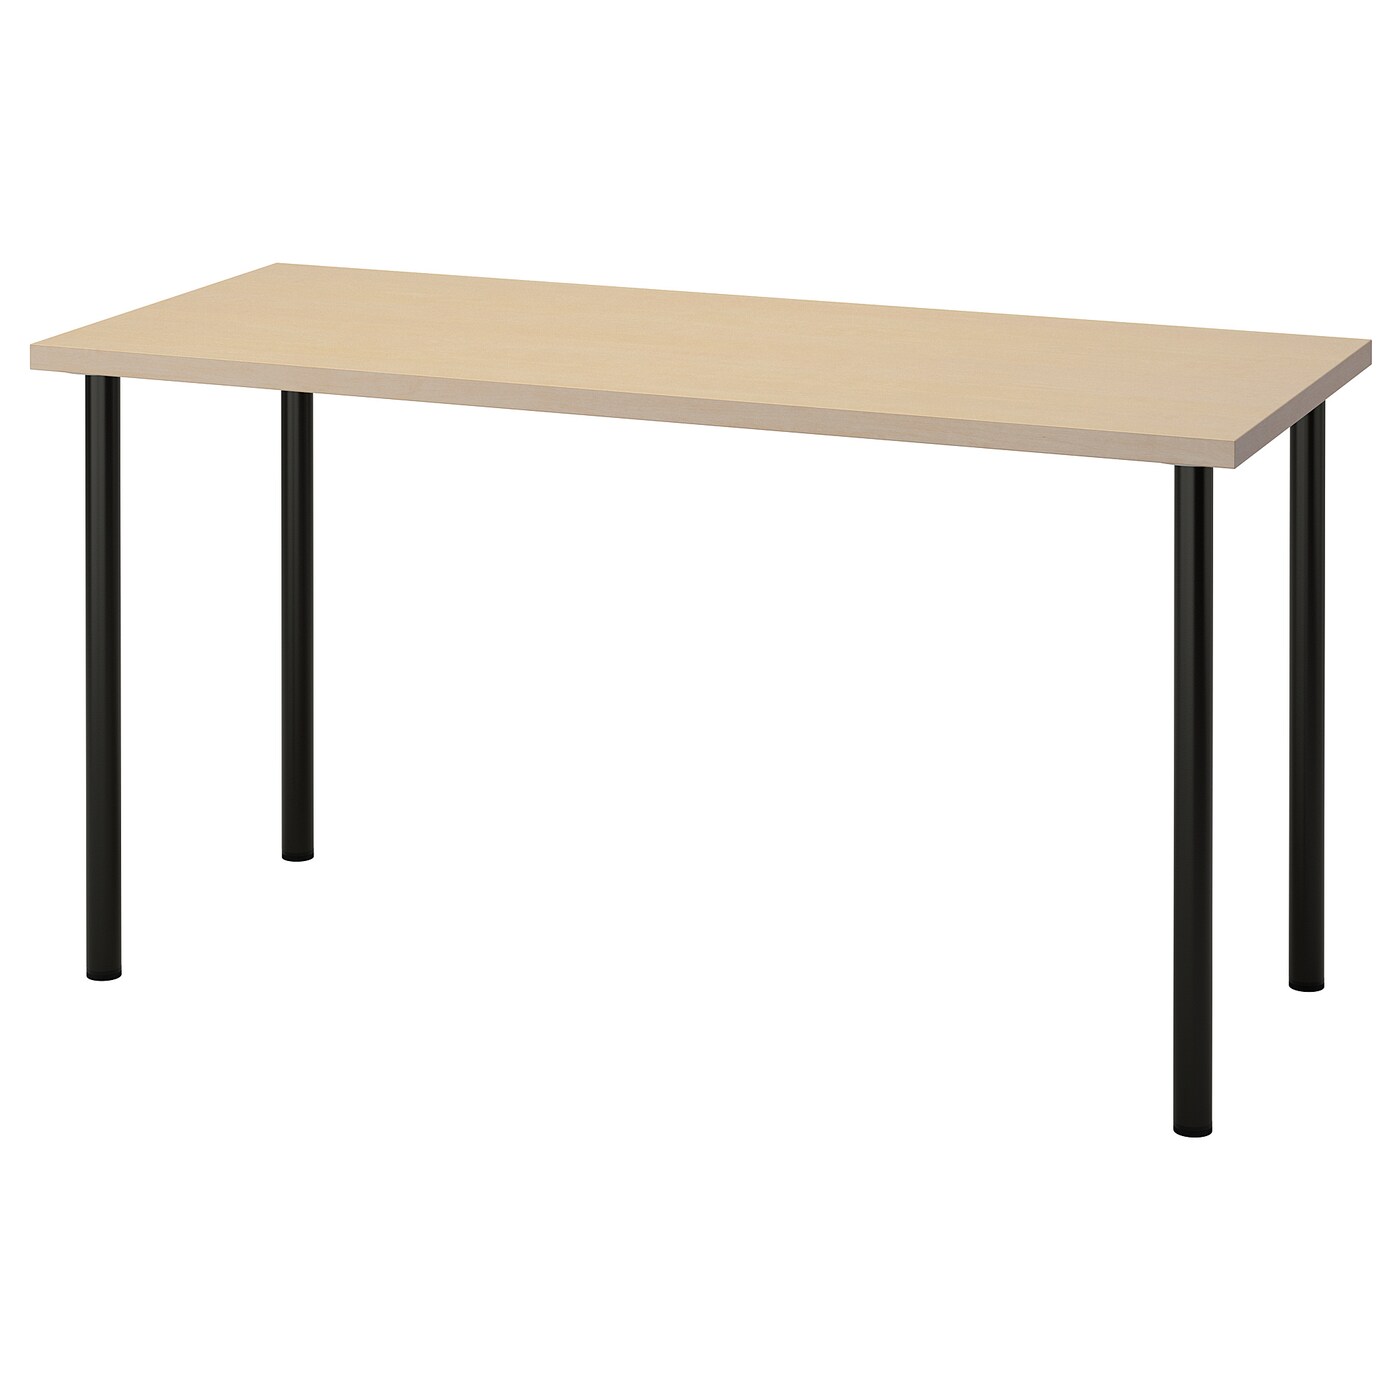 Рабочий стол - IKEA MÅLSKYTT/MALSKYTT/ADILS, 140х60 см, береза/черный, МОЛСКЮТТ/АДИЛЬС ИКЕА